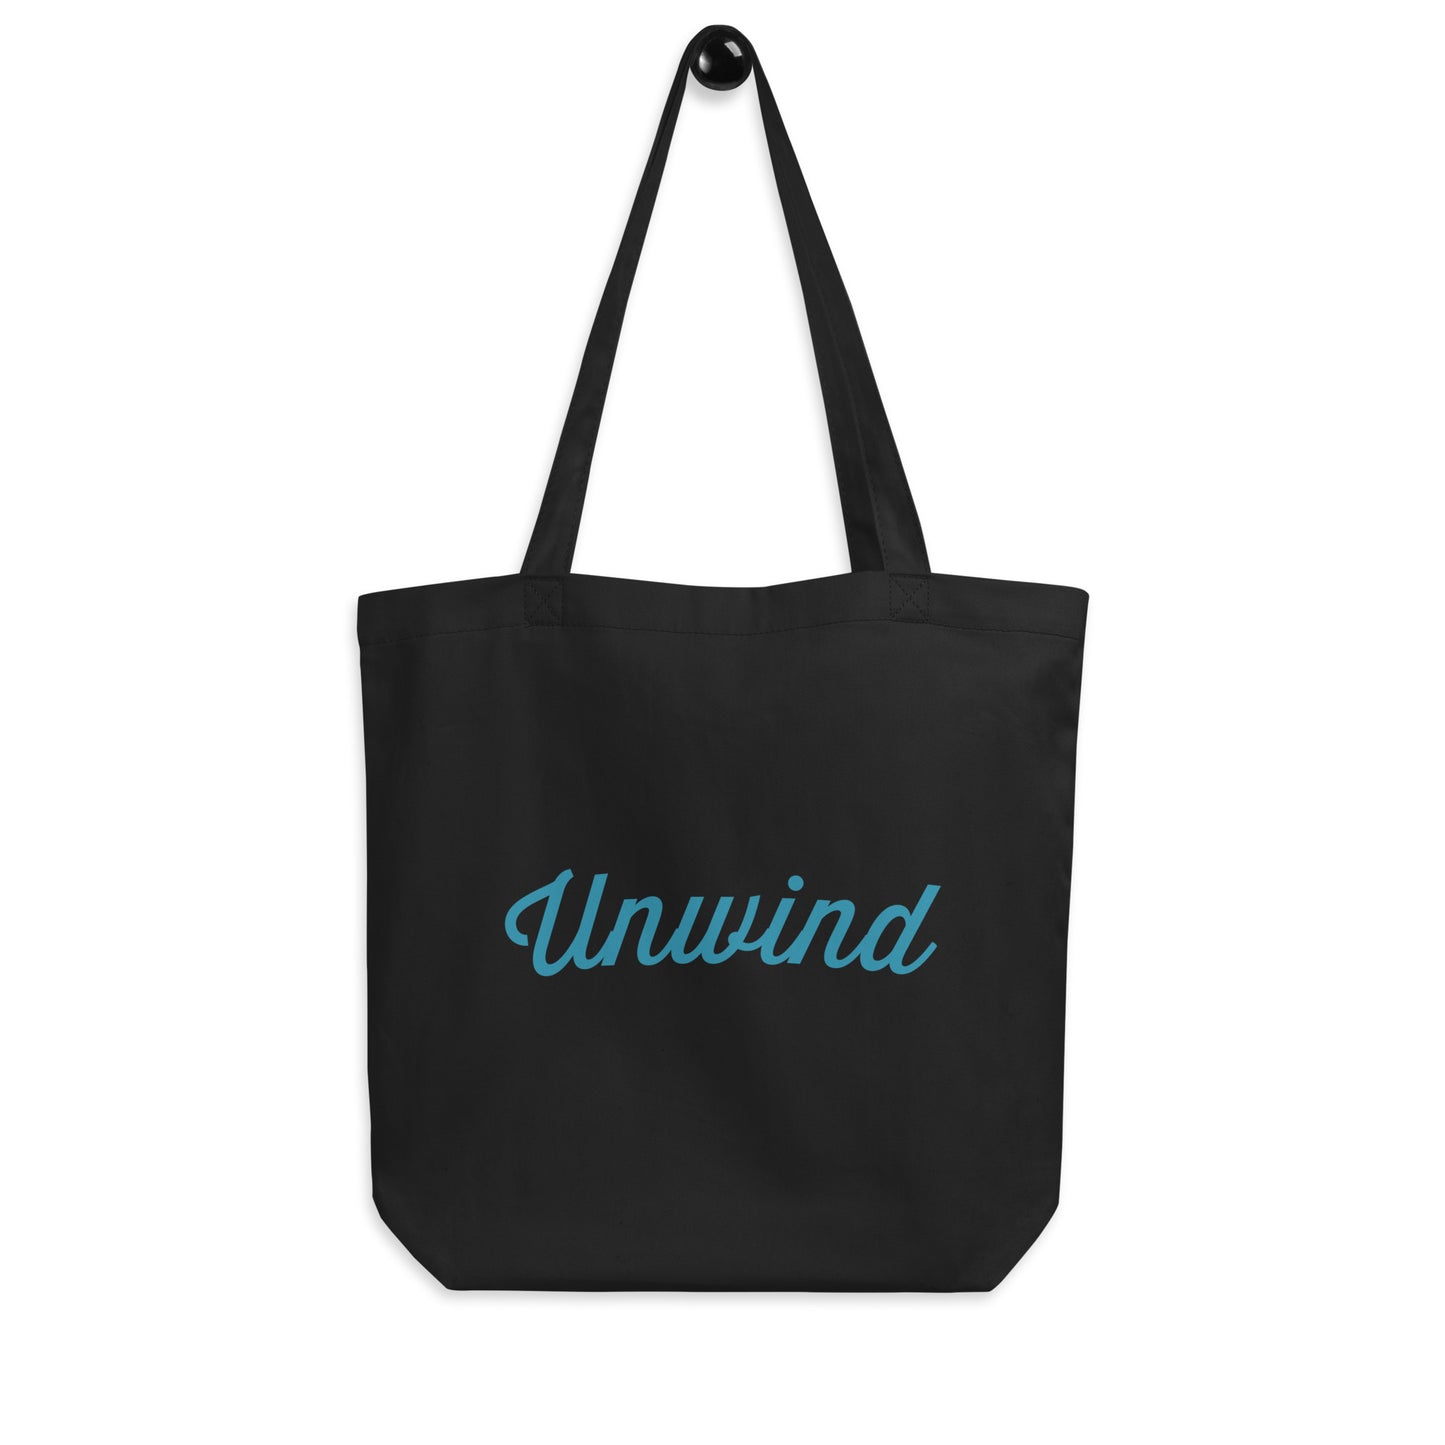 Unwind Launch Tote Bag